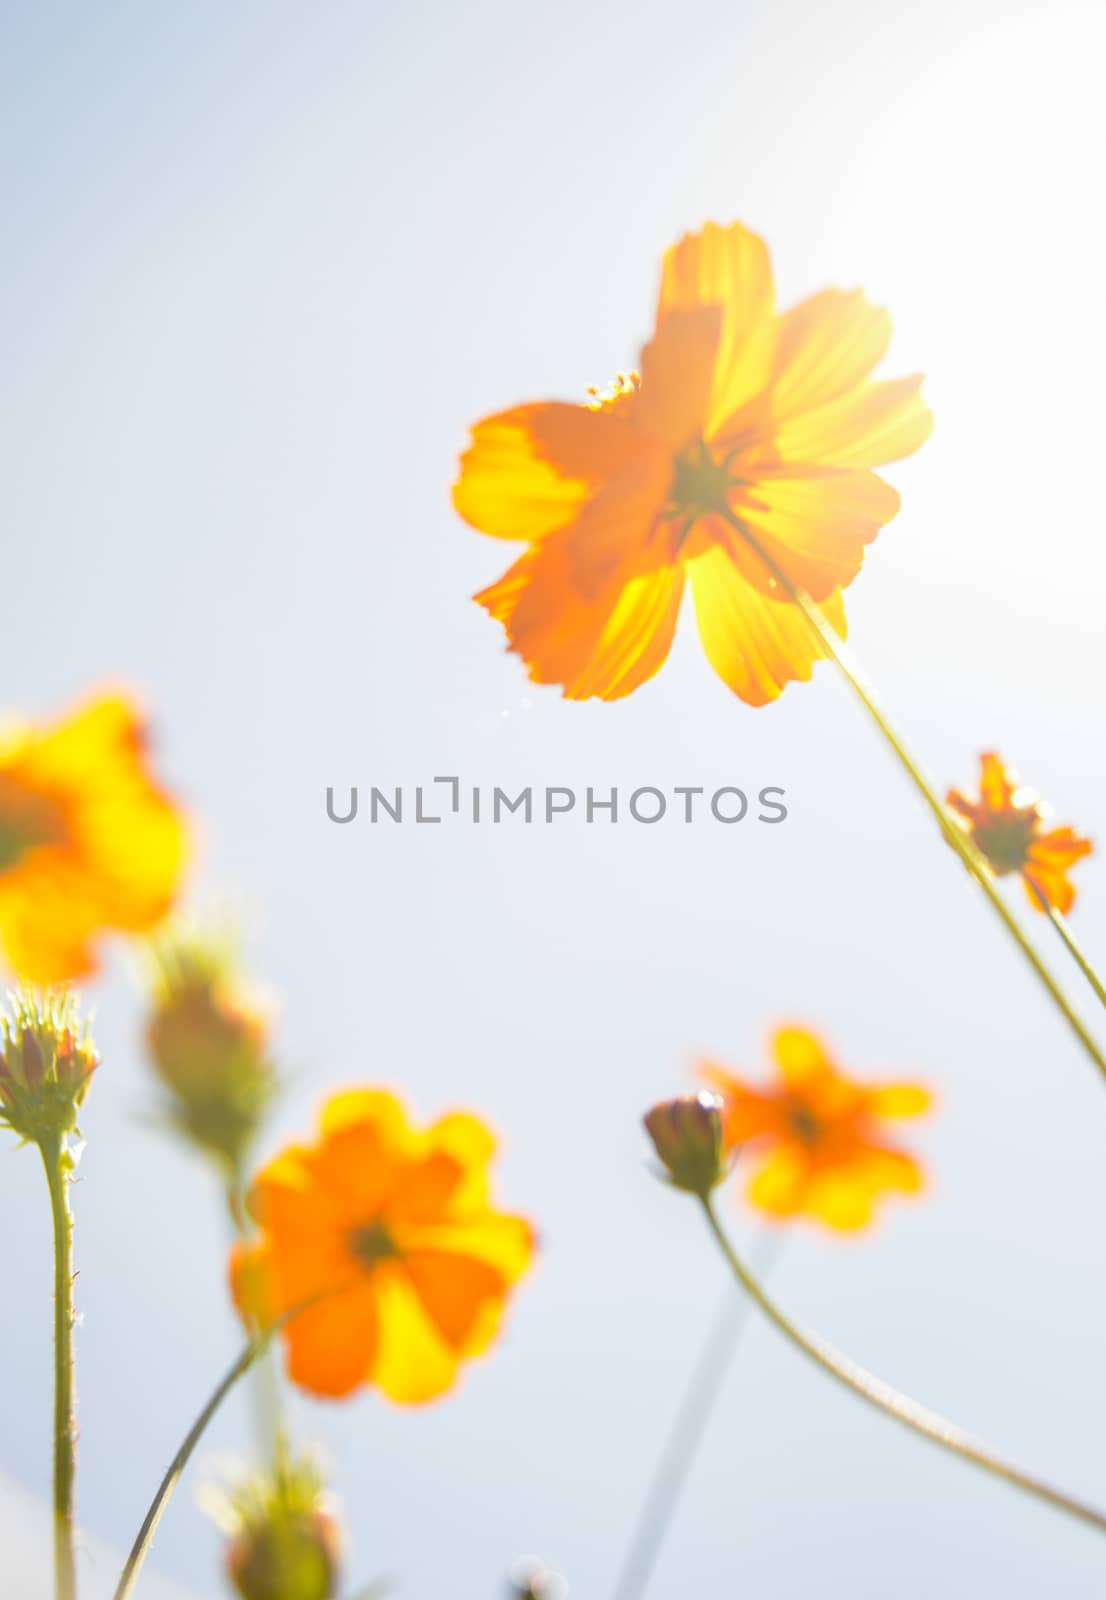 Yellow Cosmos flower with sunshine2 by gjeerawut